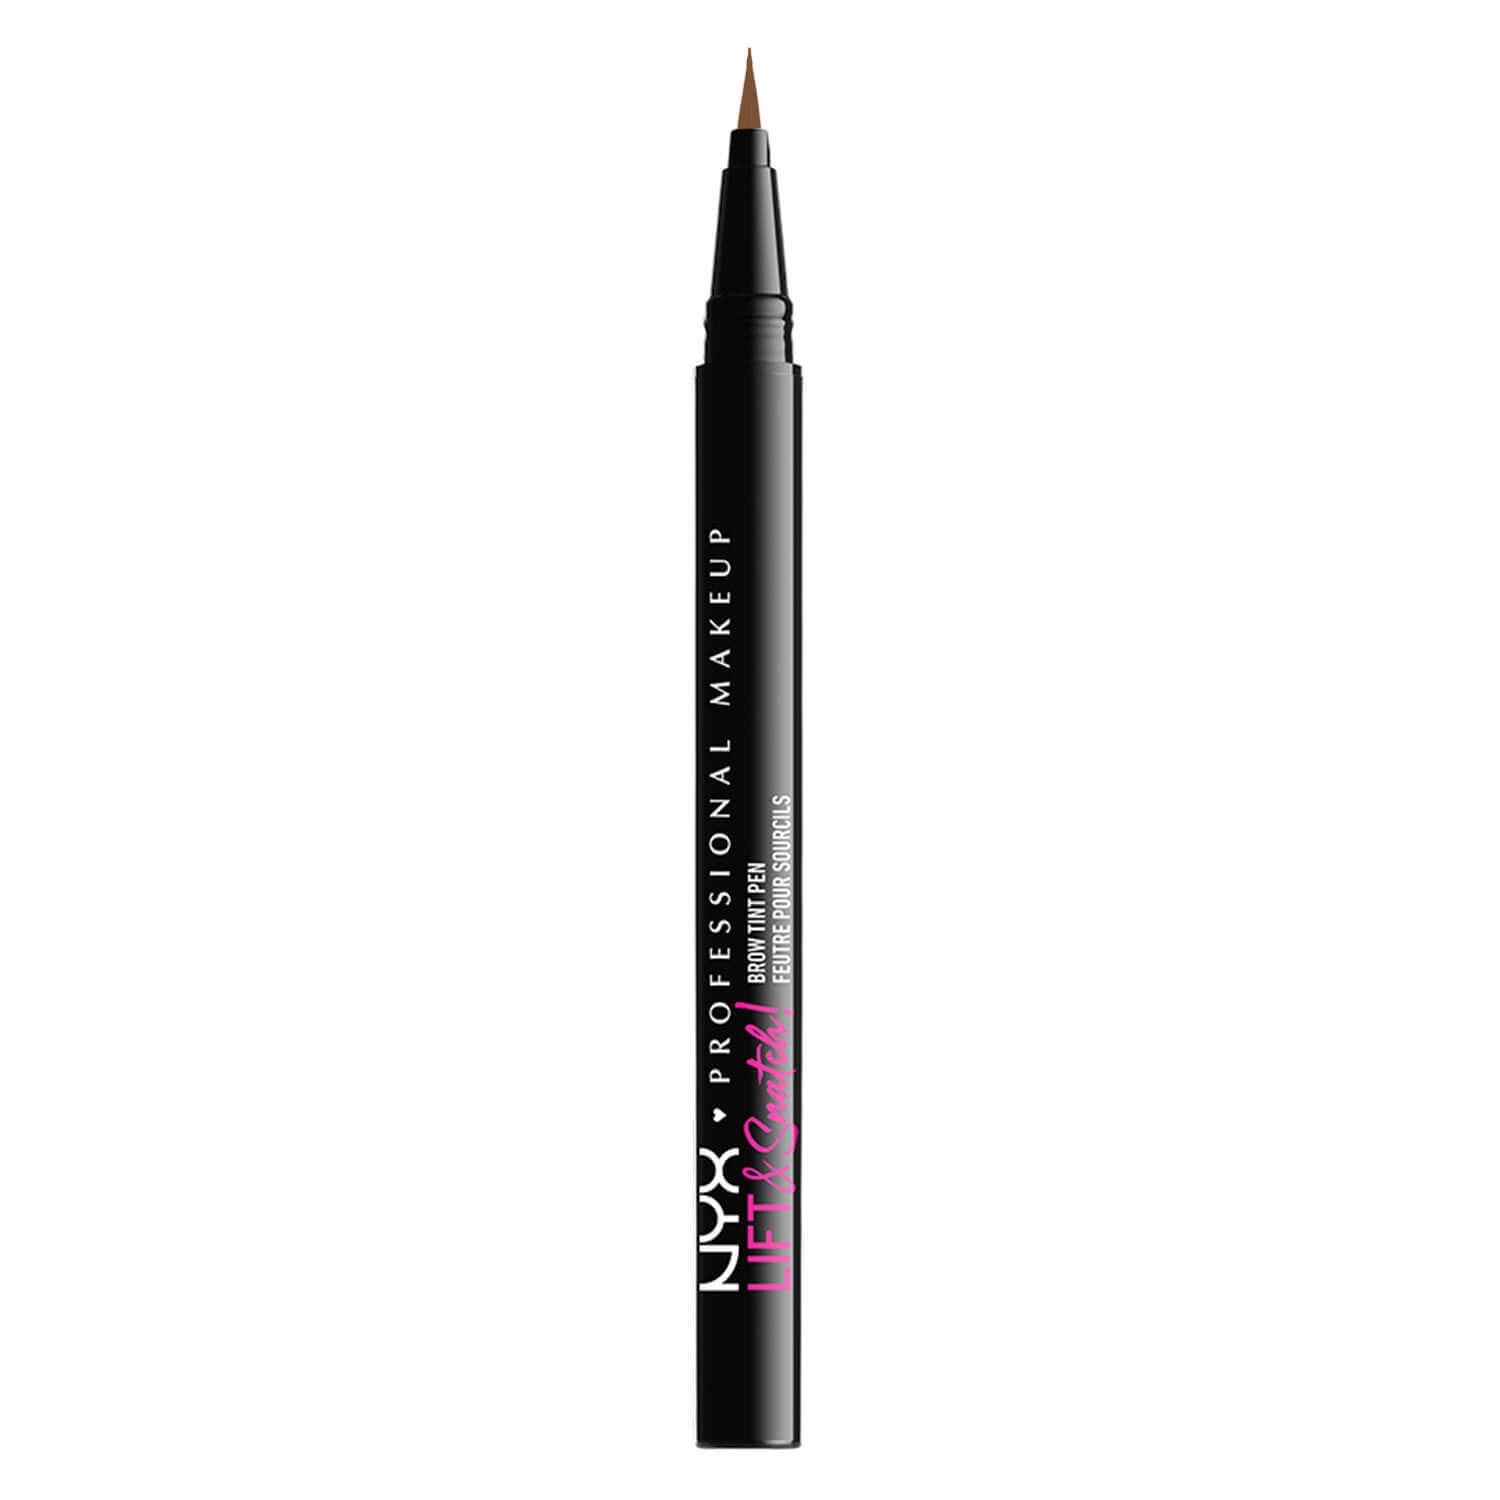 Produktbild von NYX Brows - Lift & Snatch! Brow Tint Pen Caramel 05